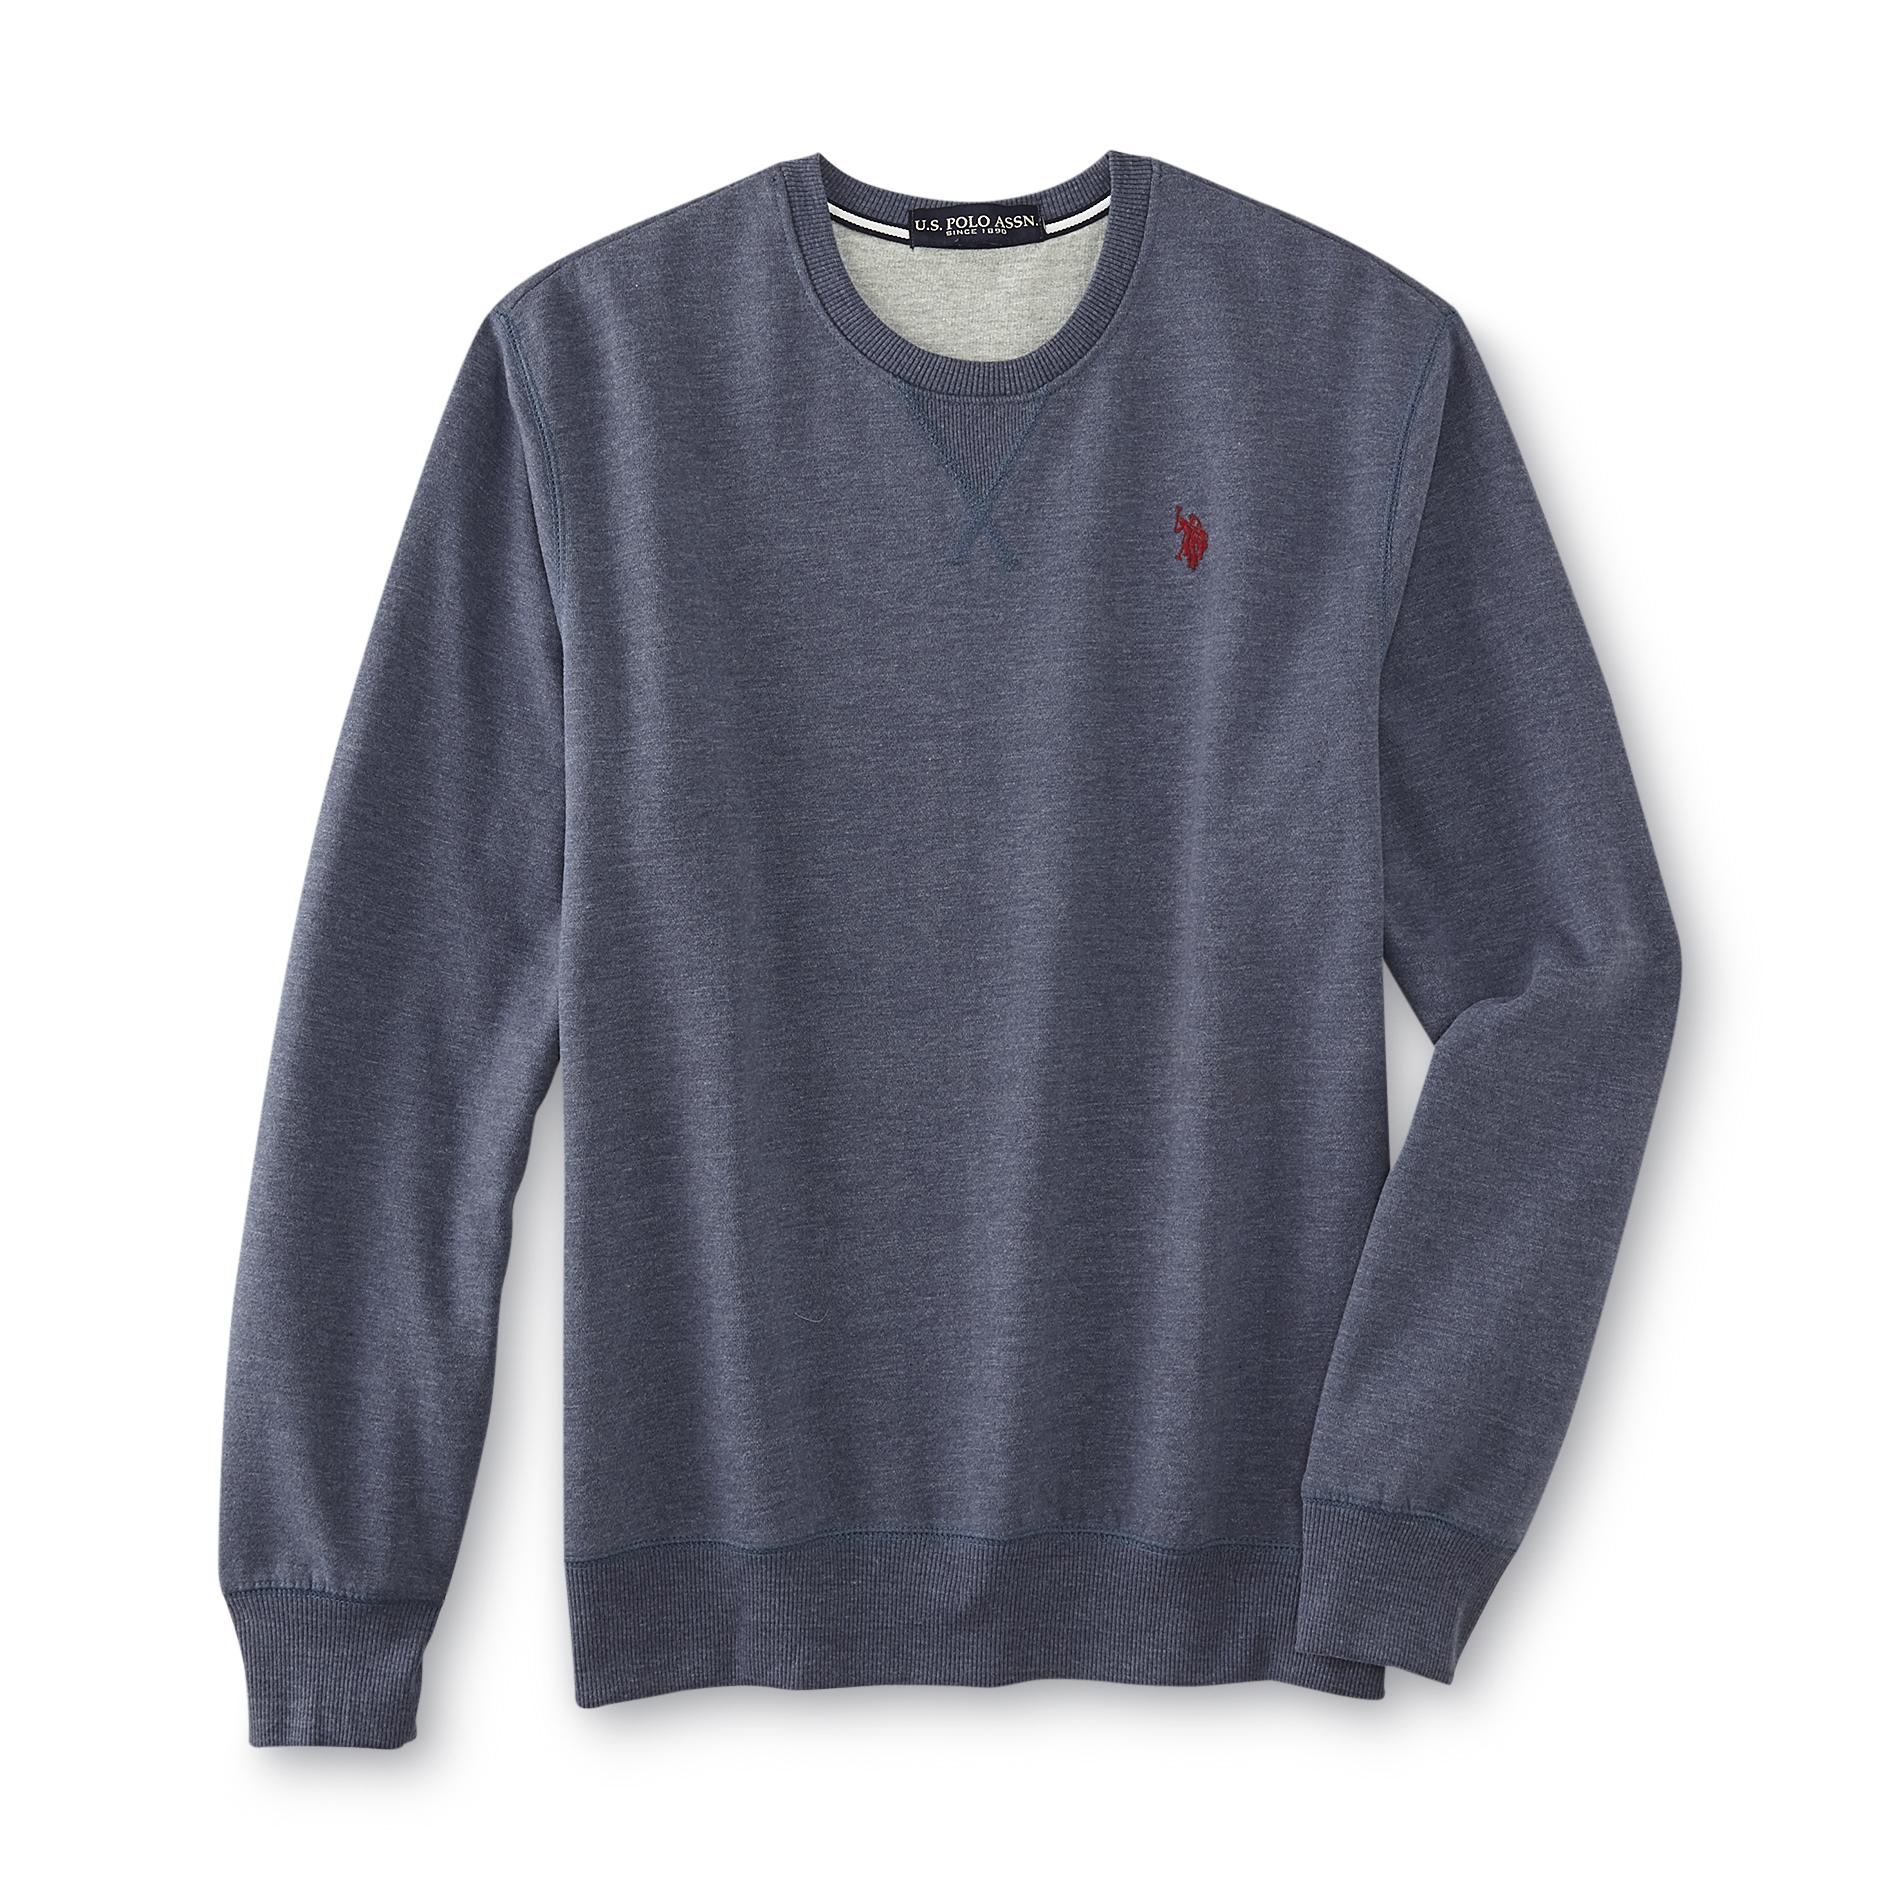 U.S. Polo Assn. Men's Fleece Sweatshirt